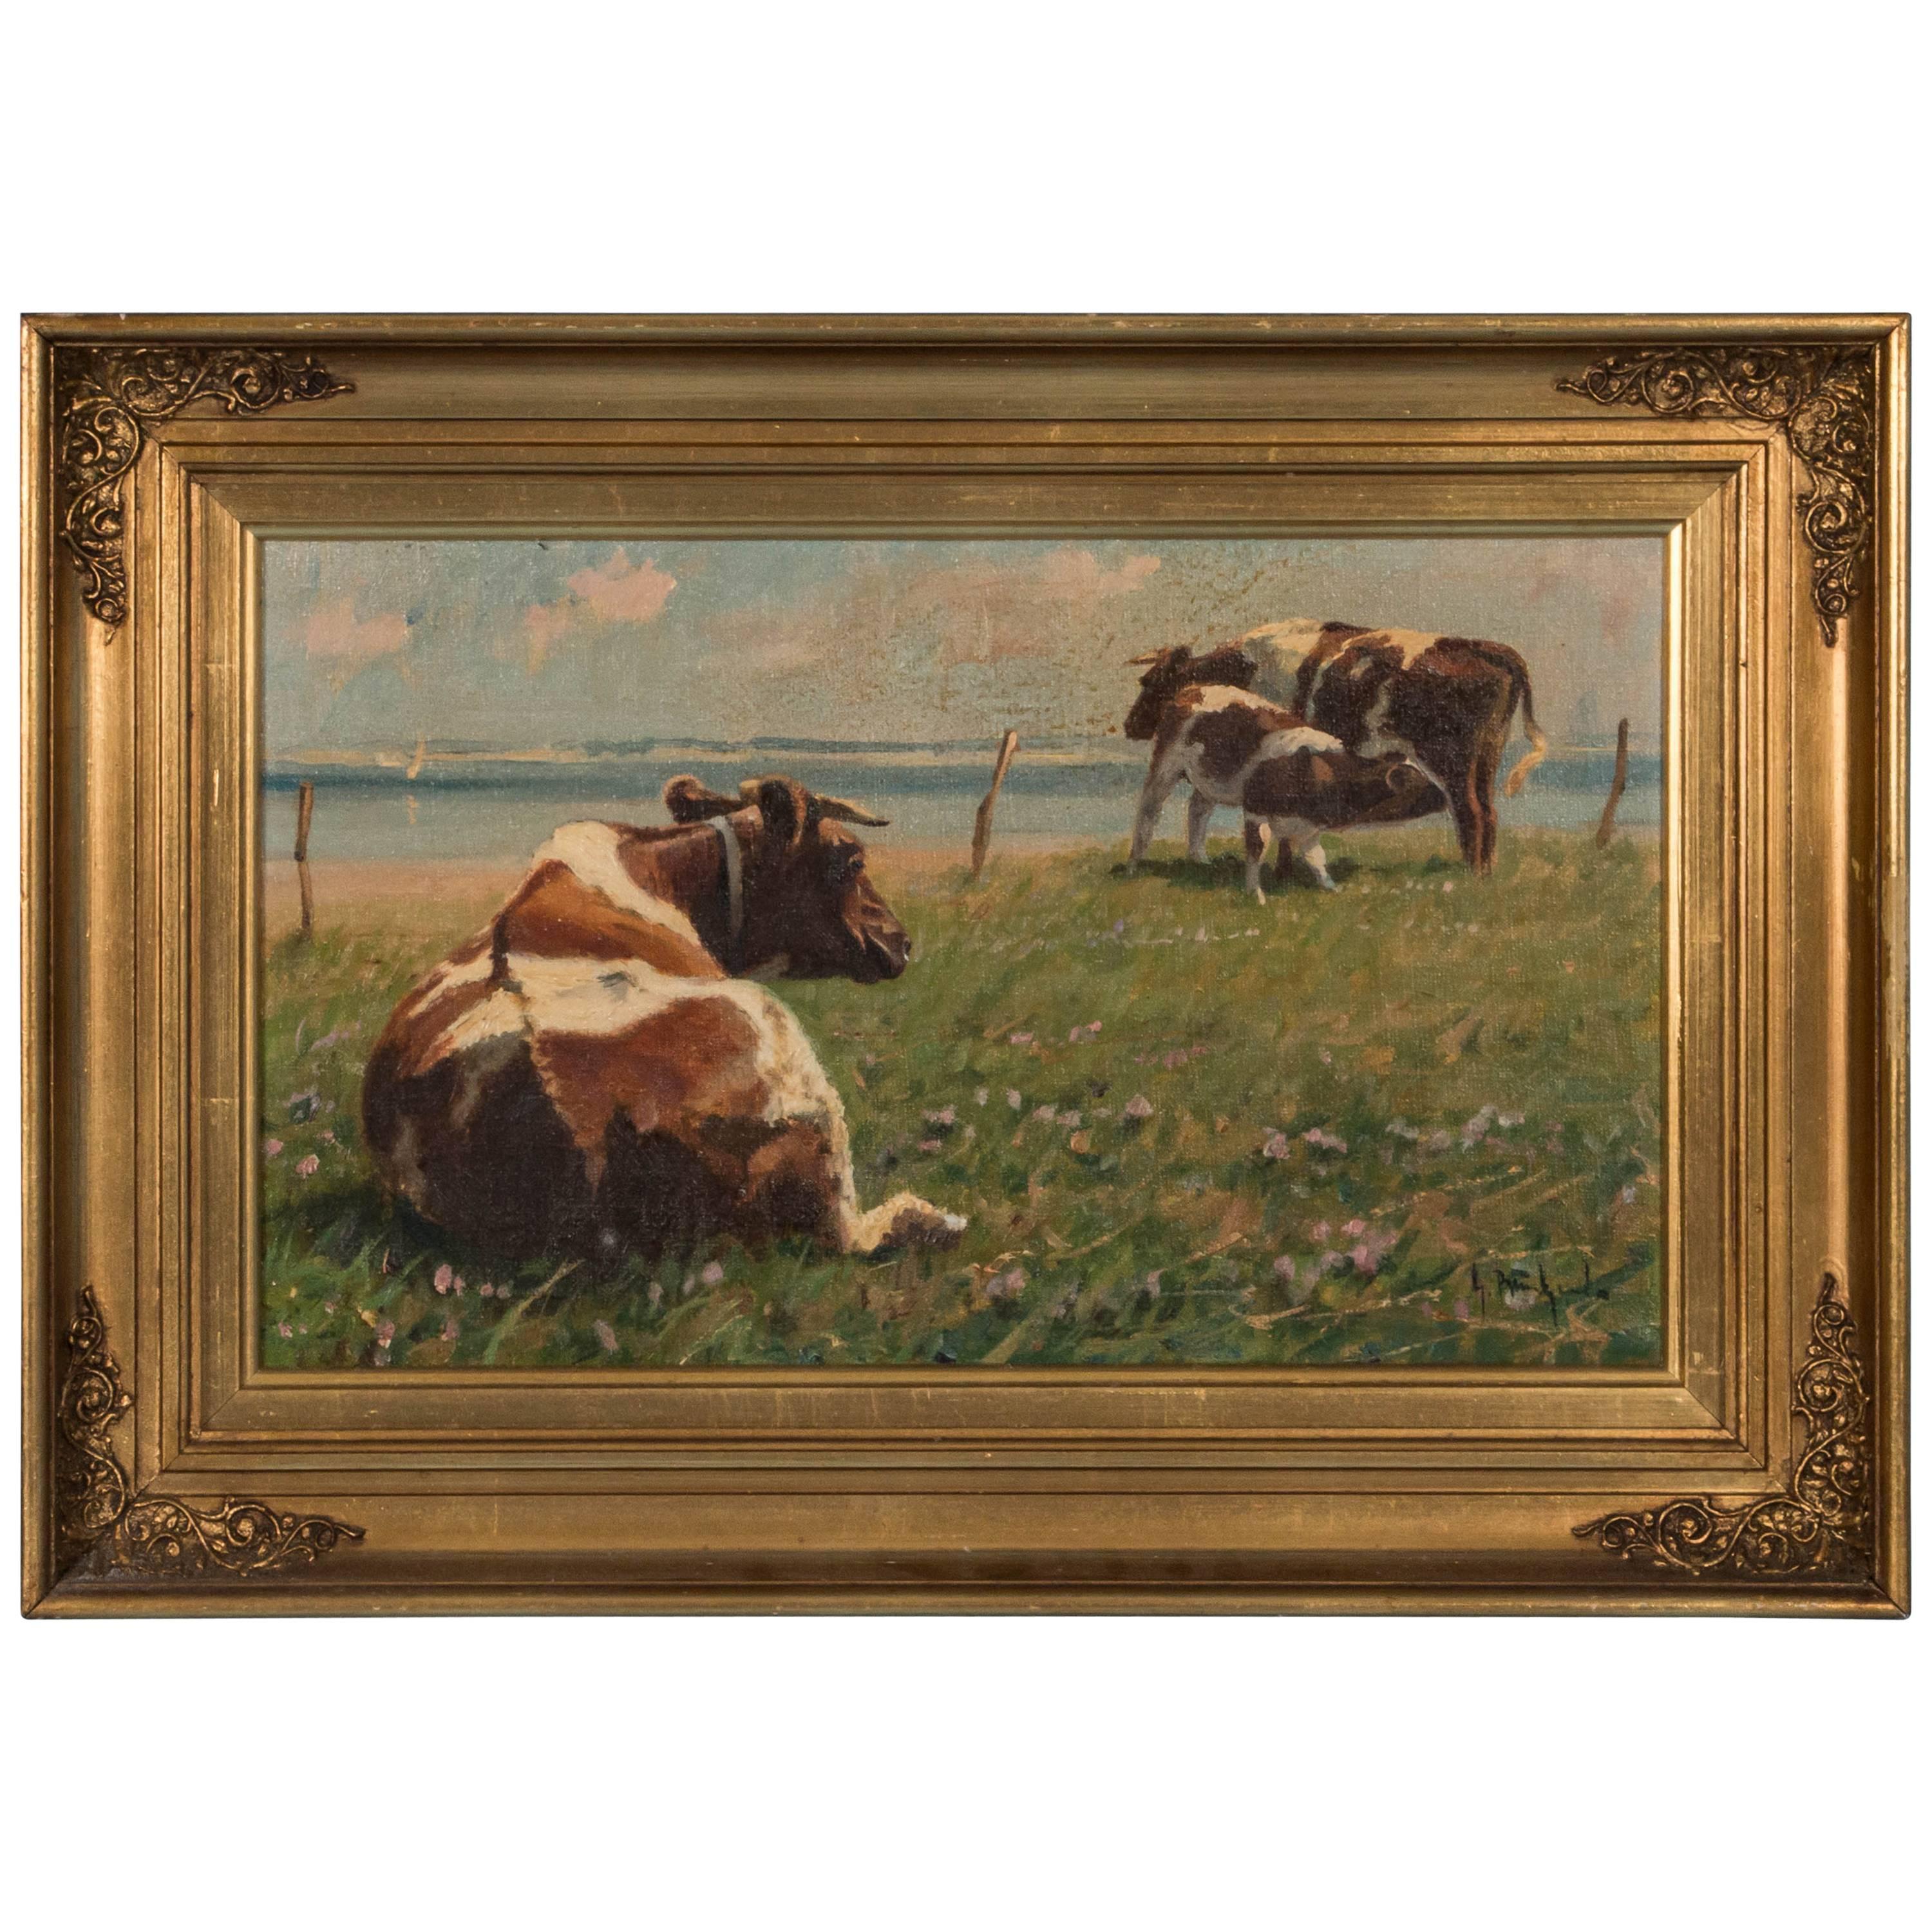 Original Pastoral Landscape Oil Painting with Cows by Gunnar Bundgaard